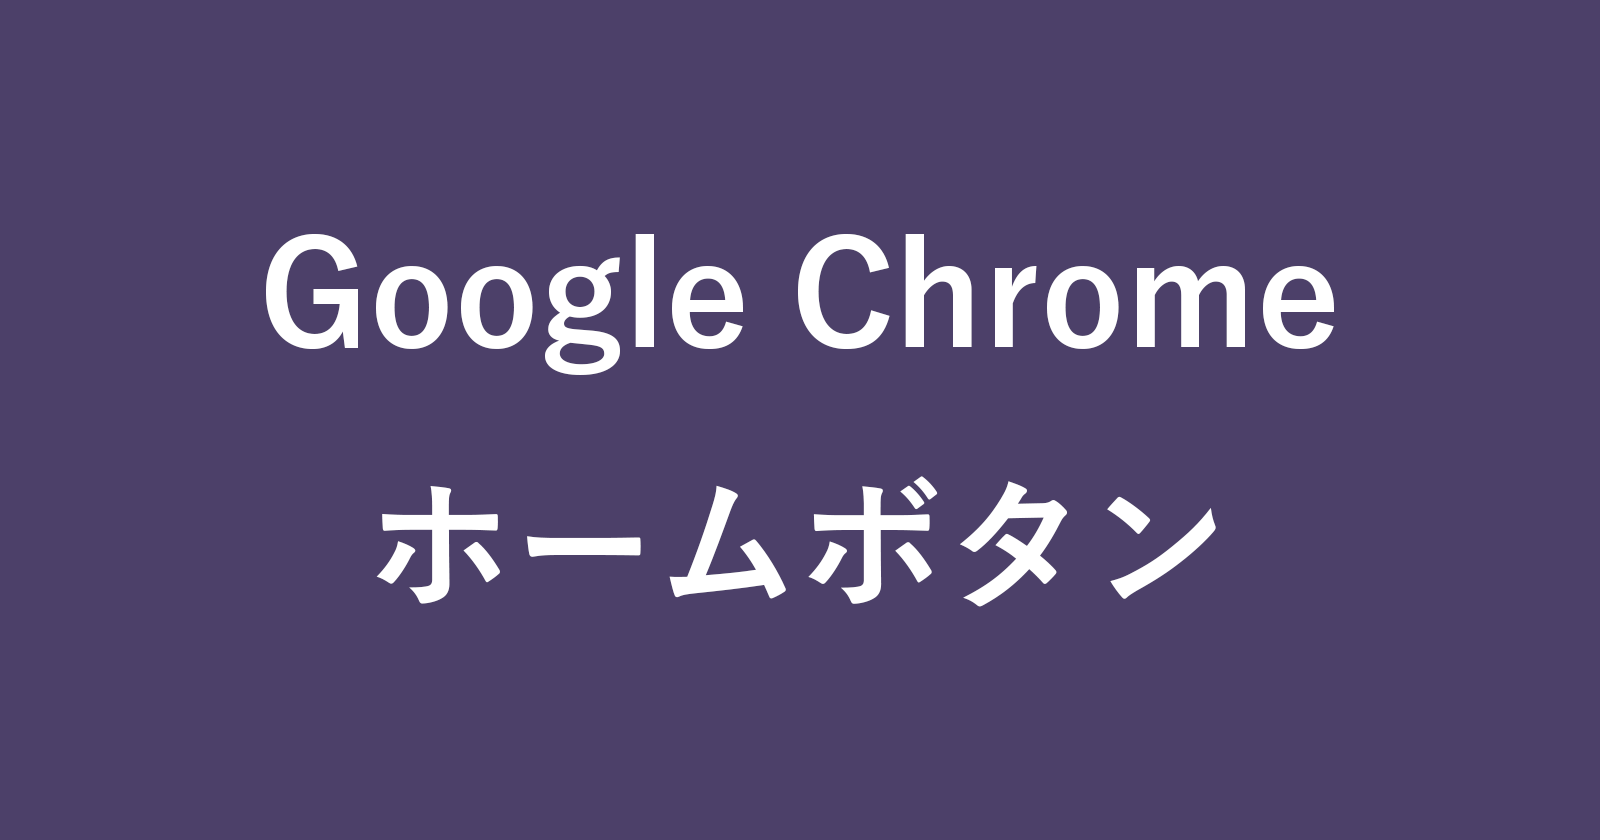 google chrome home button